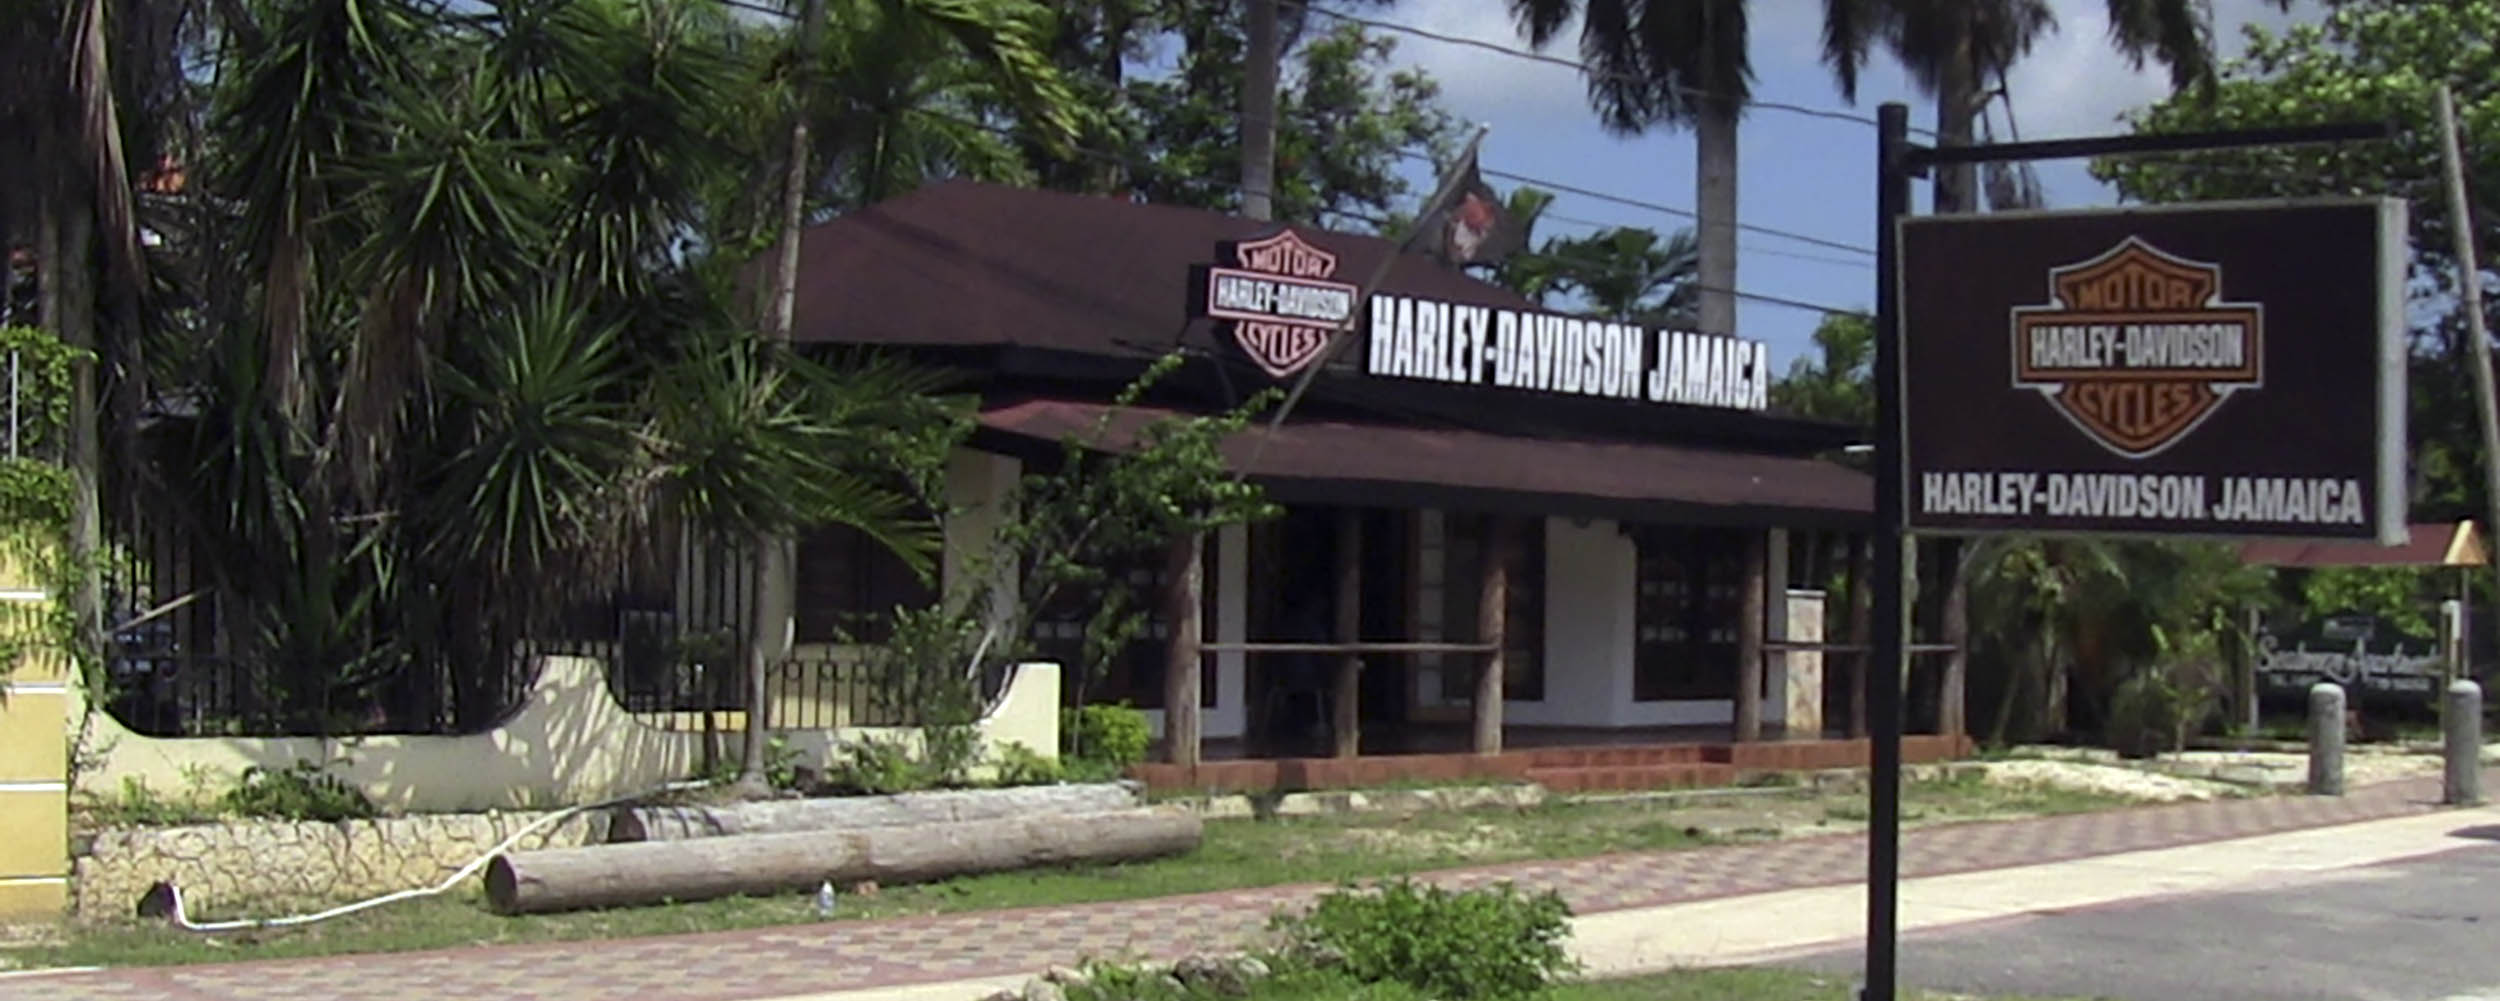 Harley-Davidson - Norman Manley Boulevard - Negril Jamaica